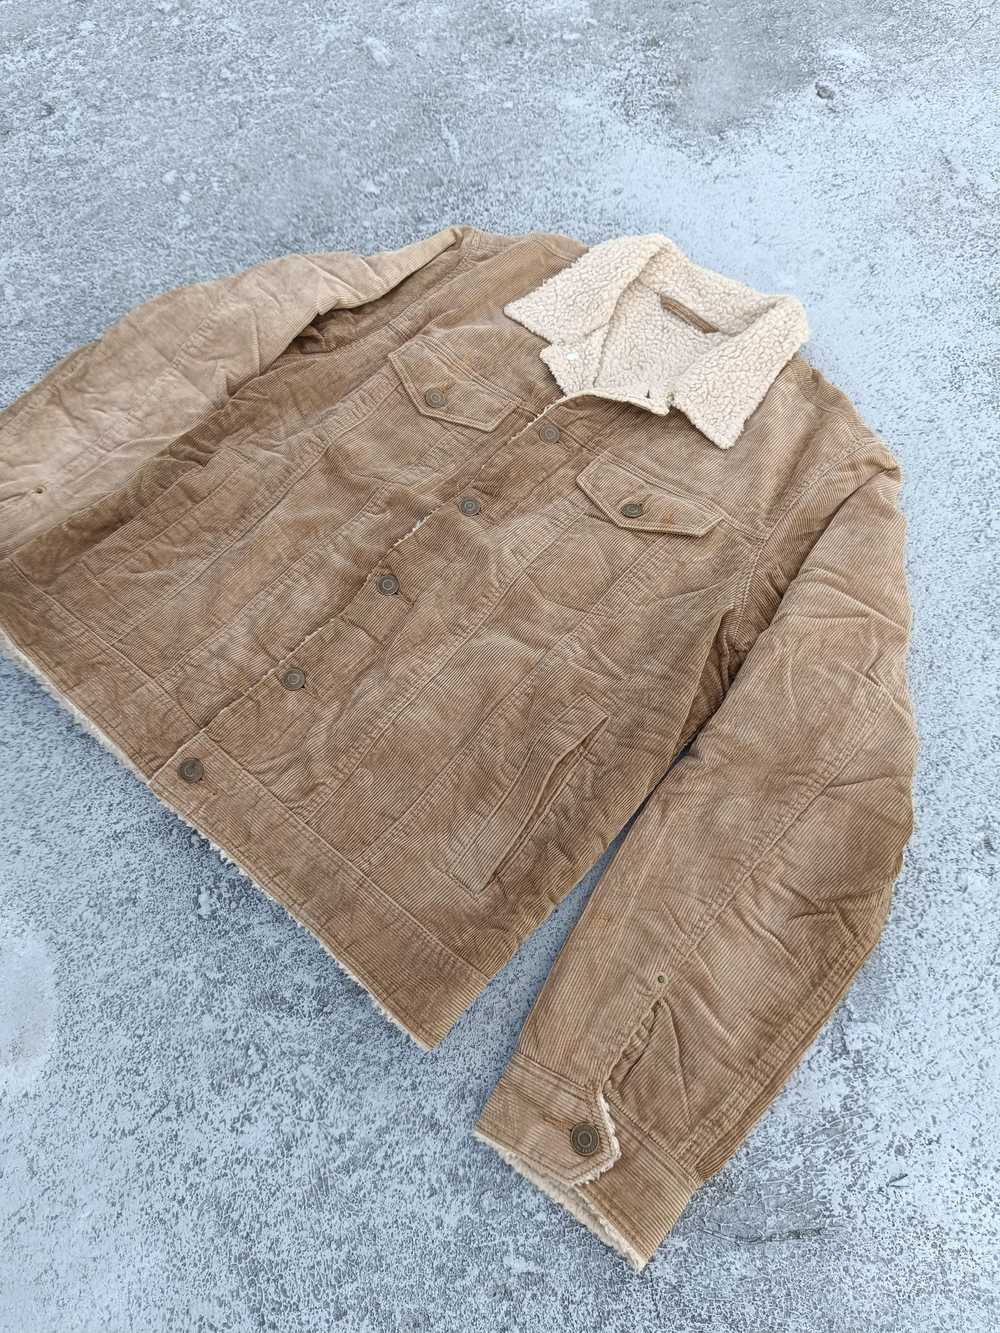 Corduroi Club × GU × Streetwear GU corduroi jacket - image 2